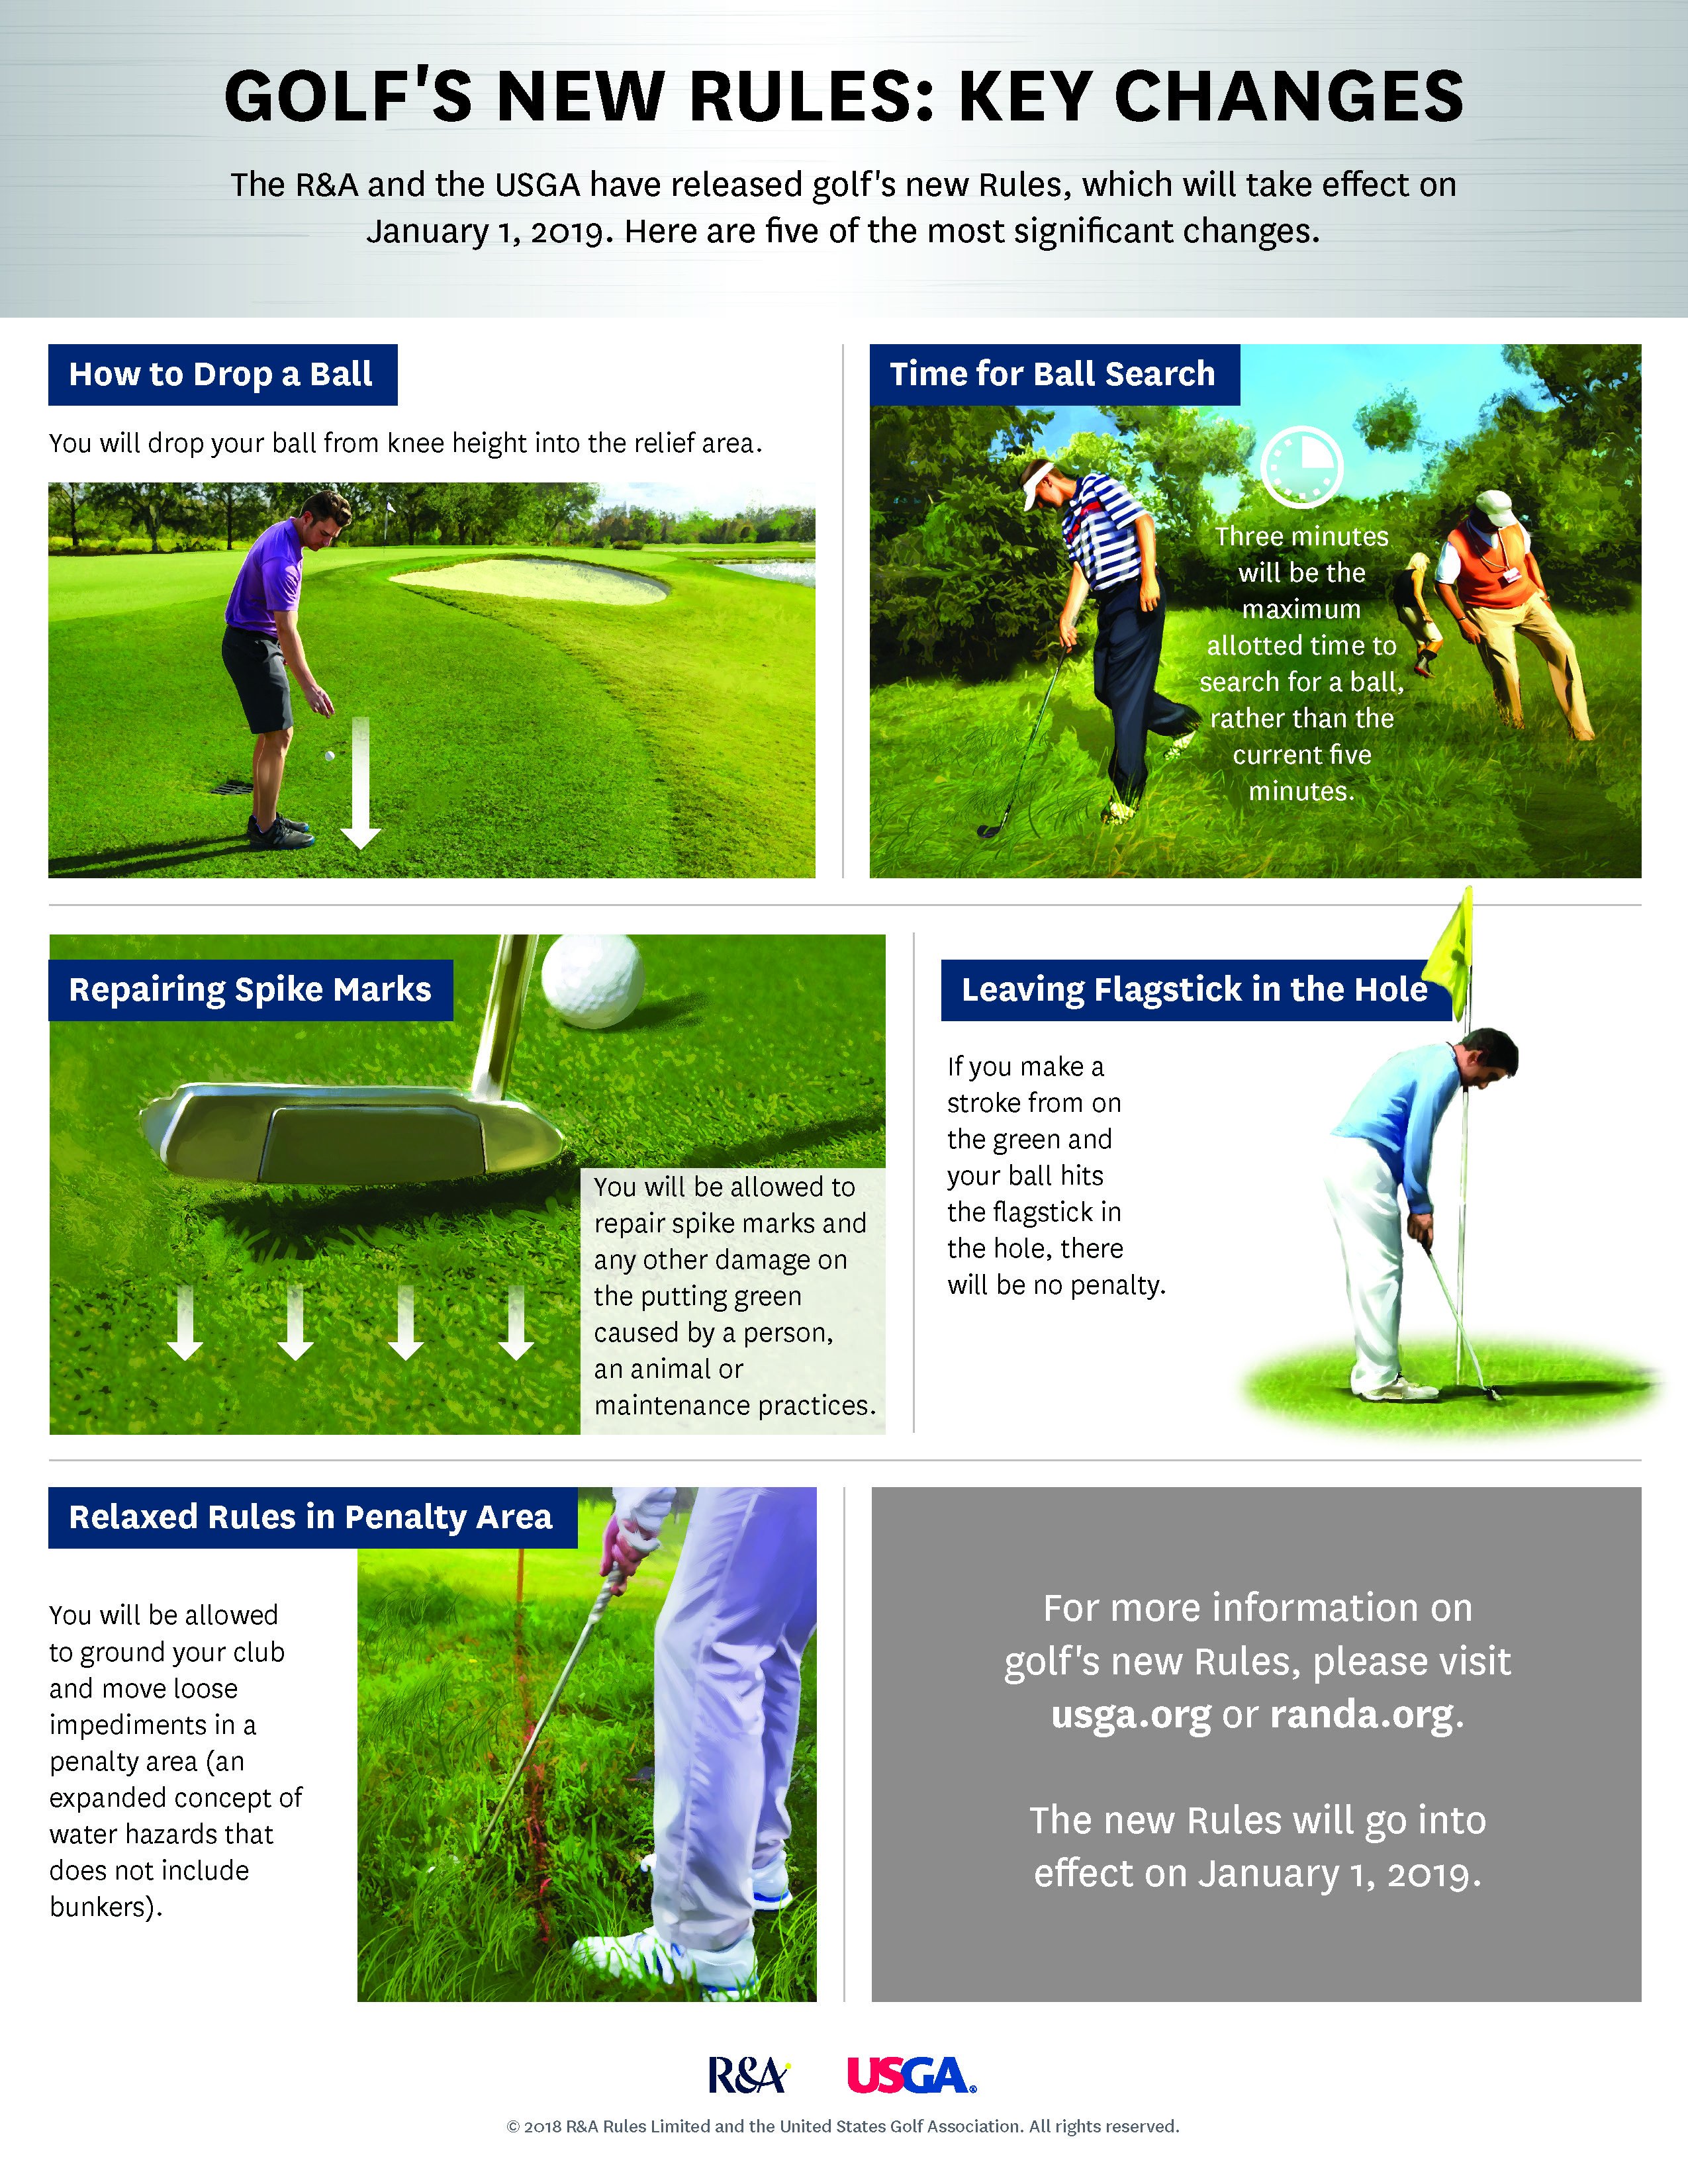 Rules of Golf - BGA Golf